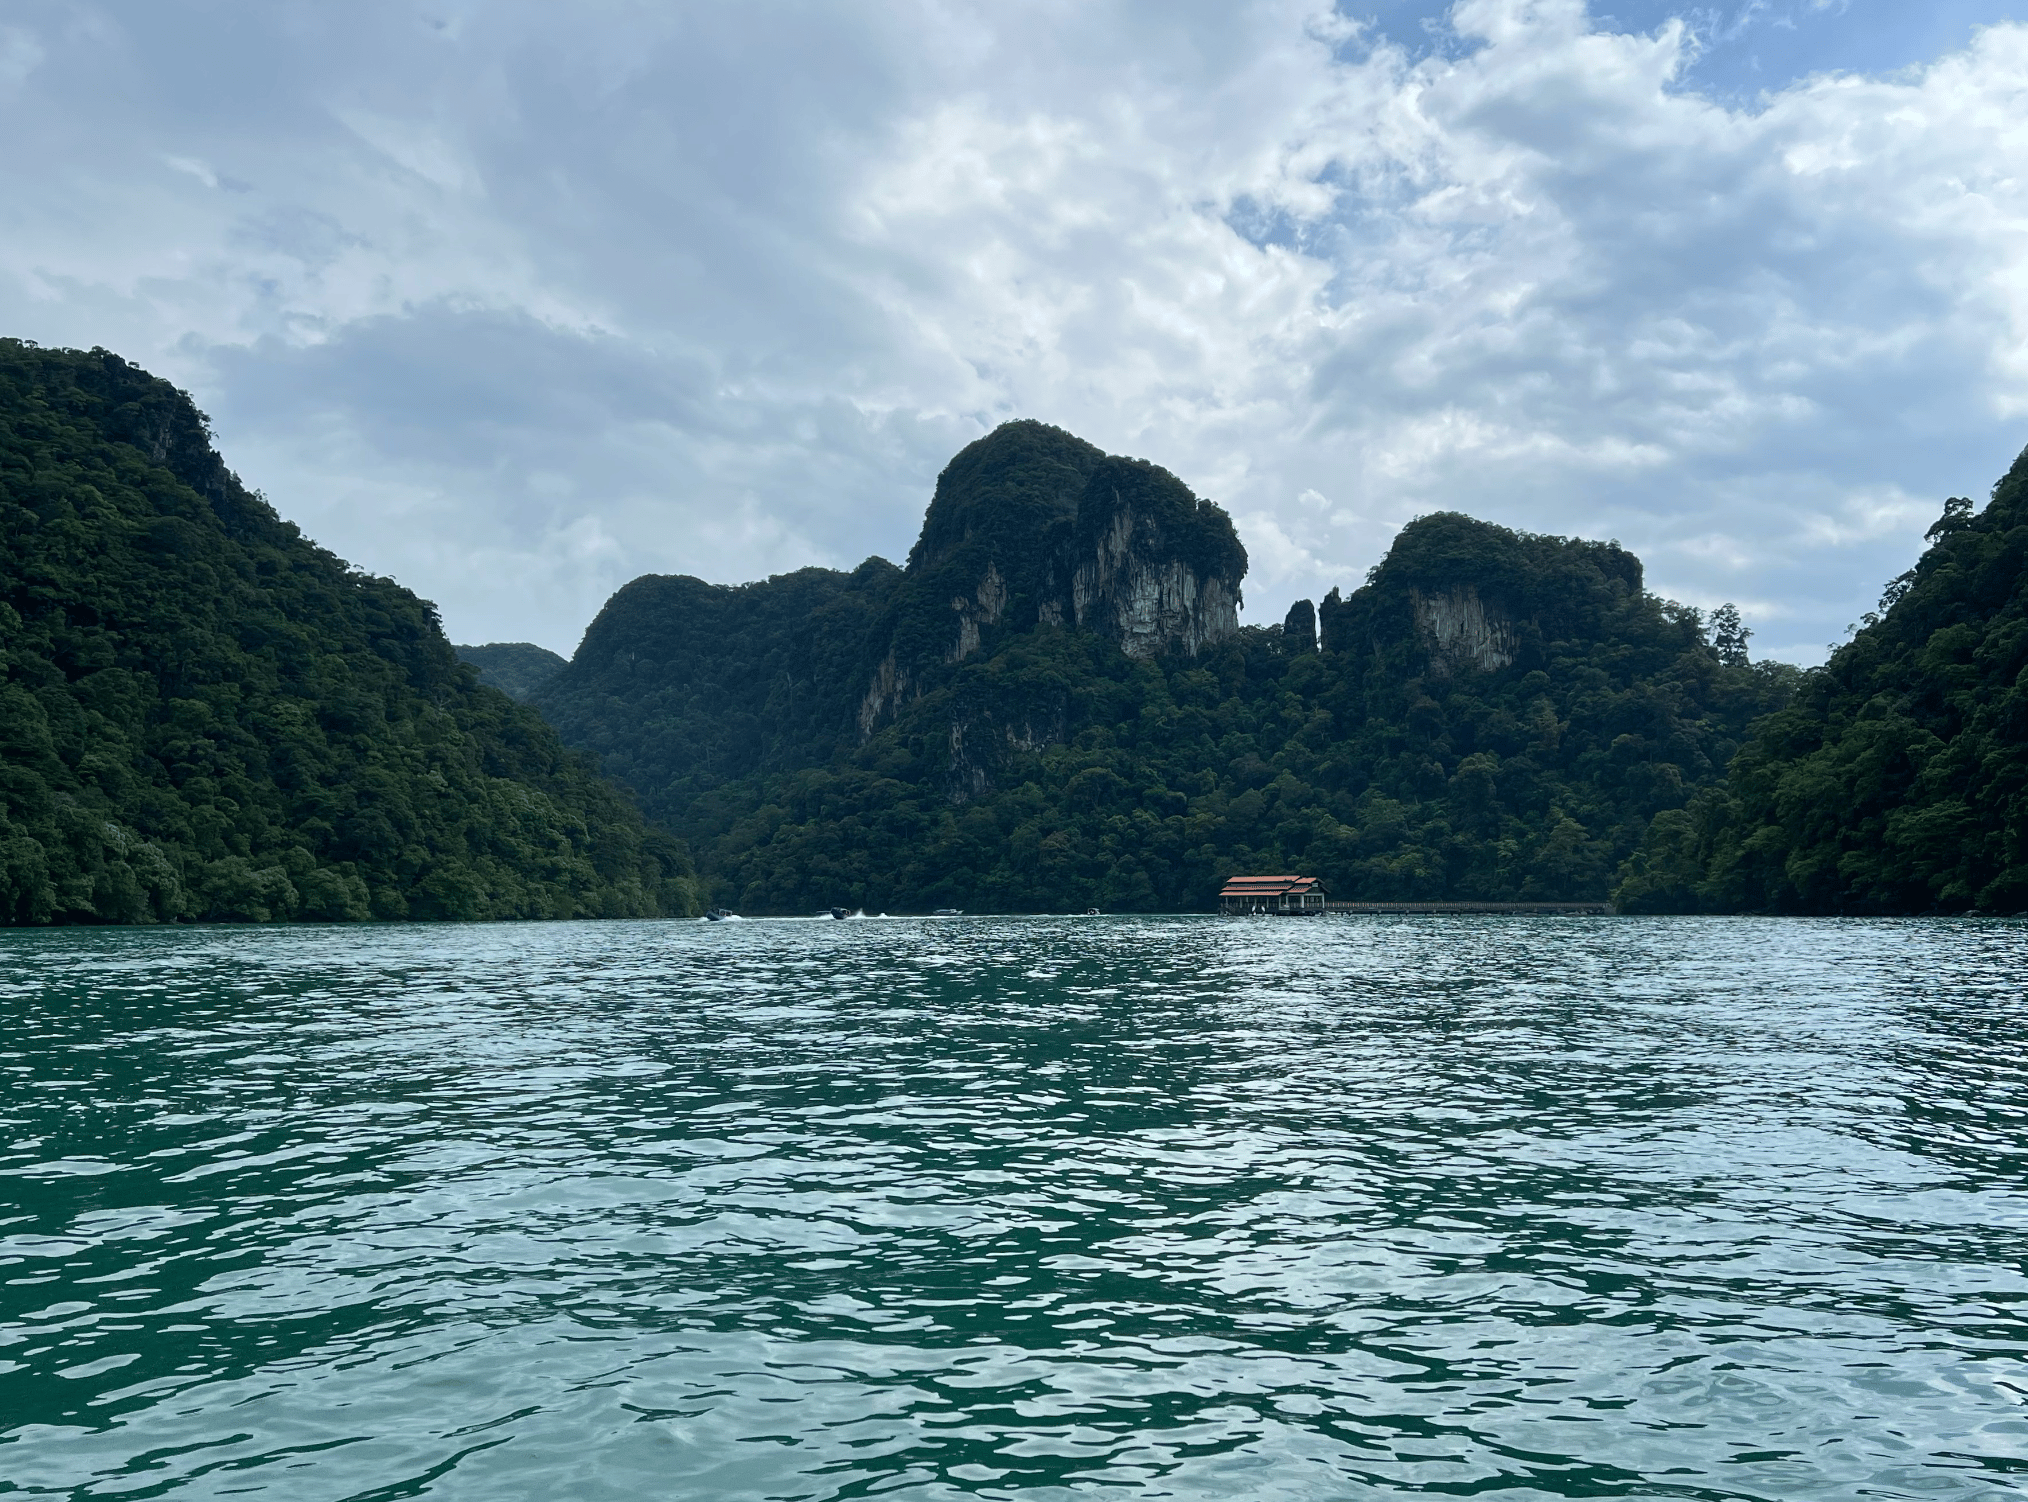 plus beaux paysages de malaisie : randonnee jetski a langkawi